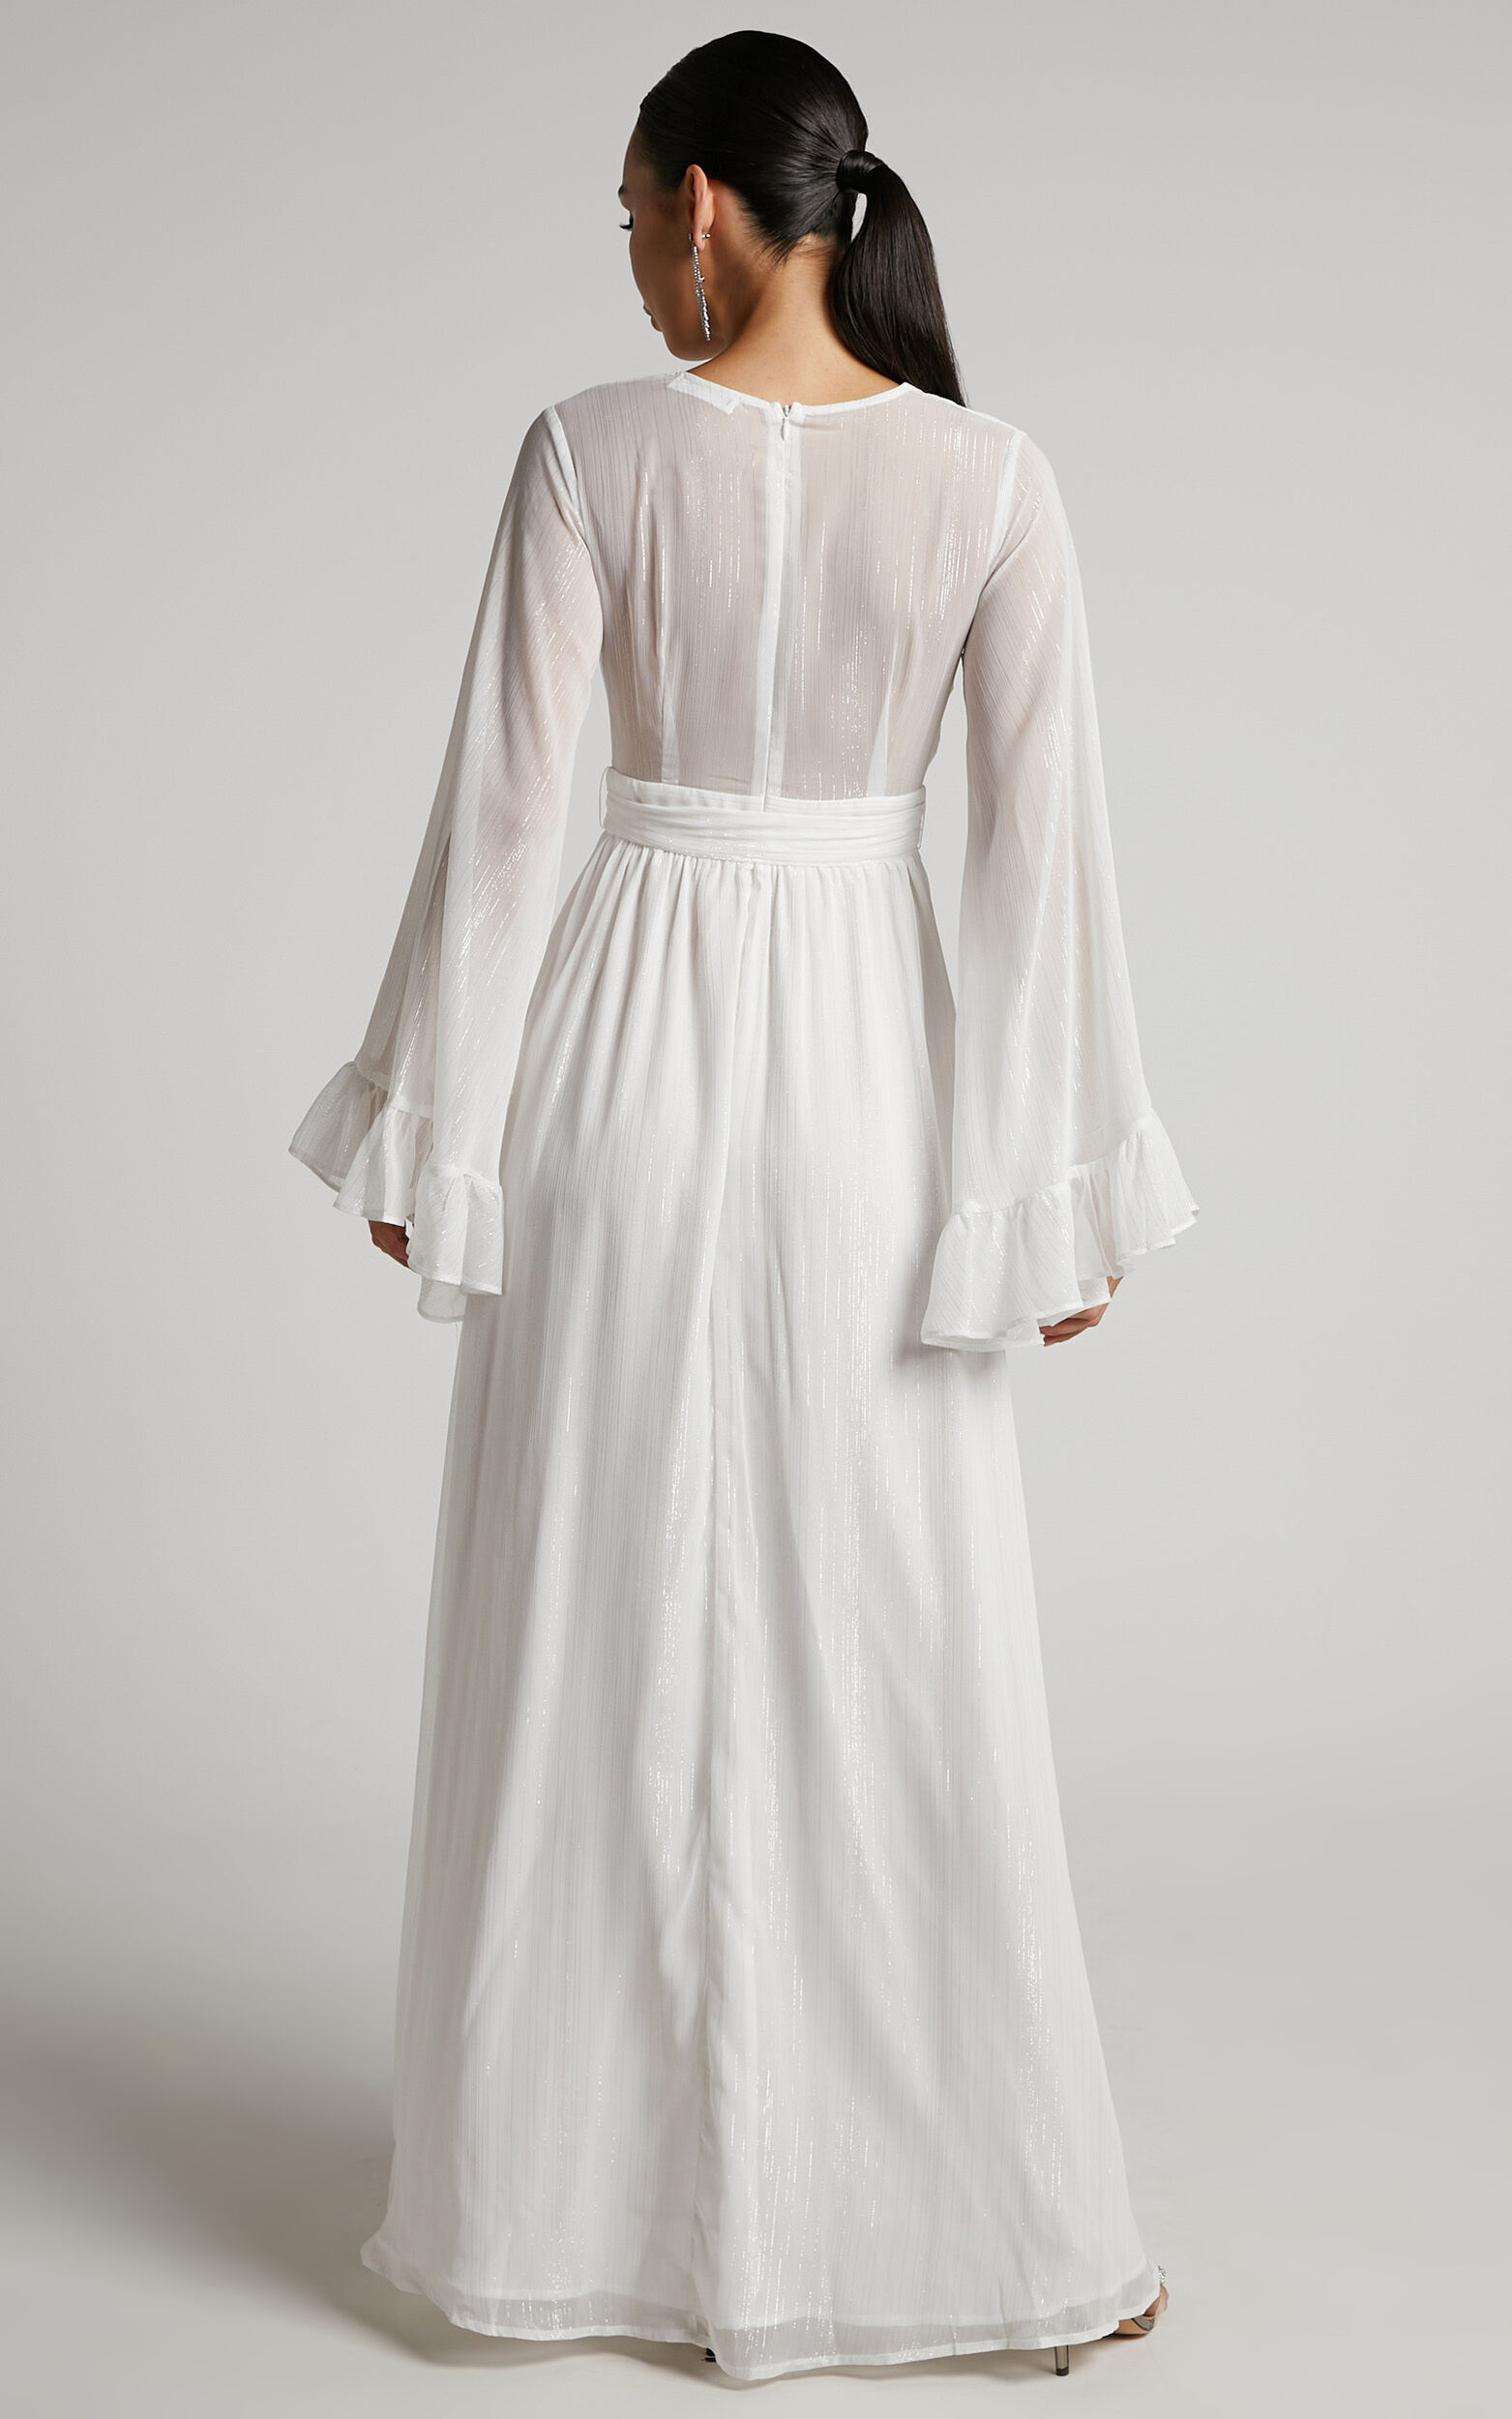 Dangerous Woman Maxi Dress - Plunge Thigh Split Dress in White